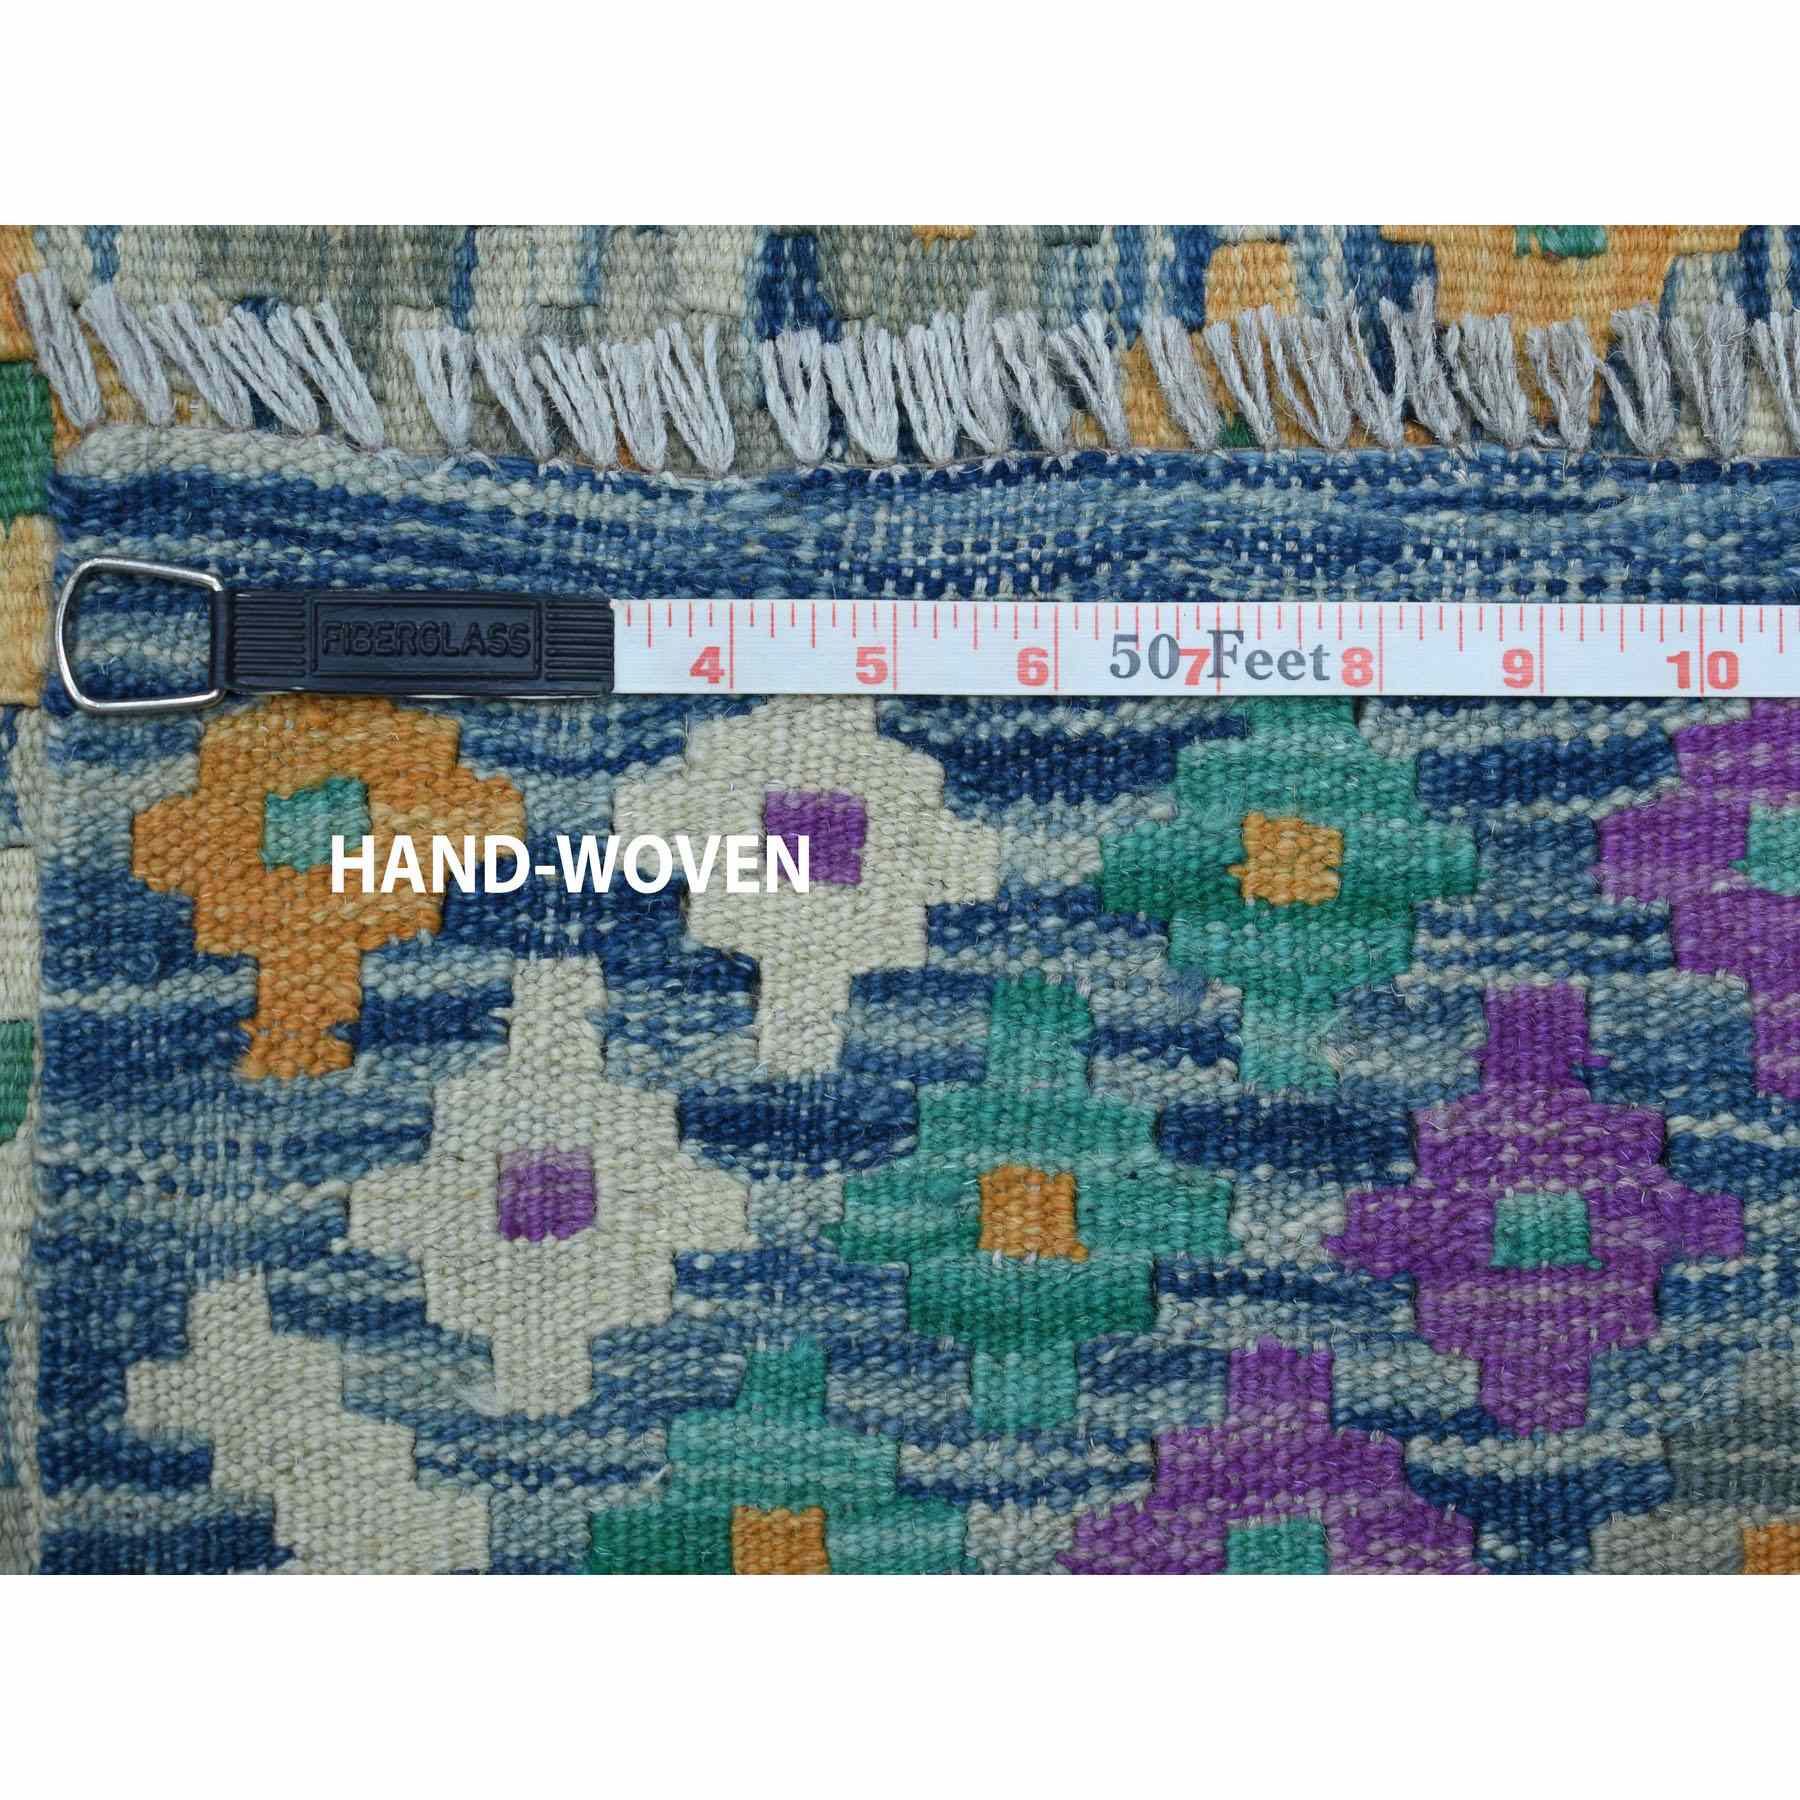 Flat-Weave-Hand-Woven-Rug-260995